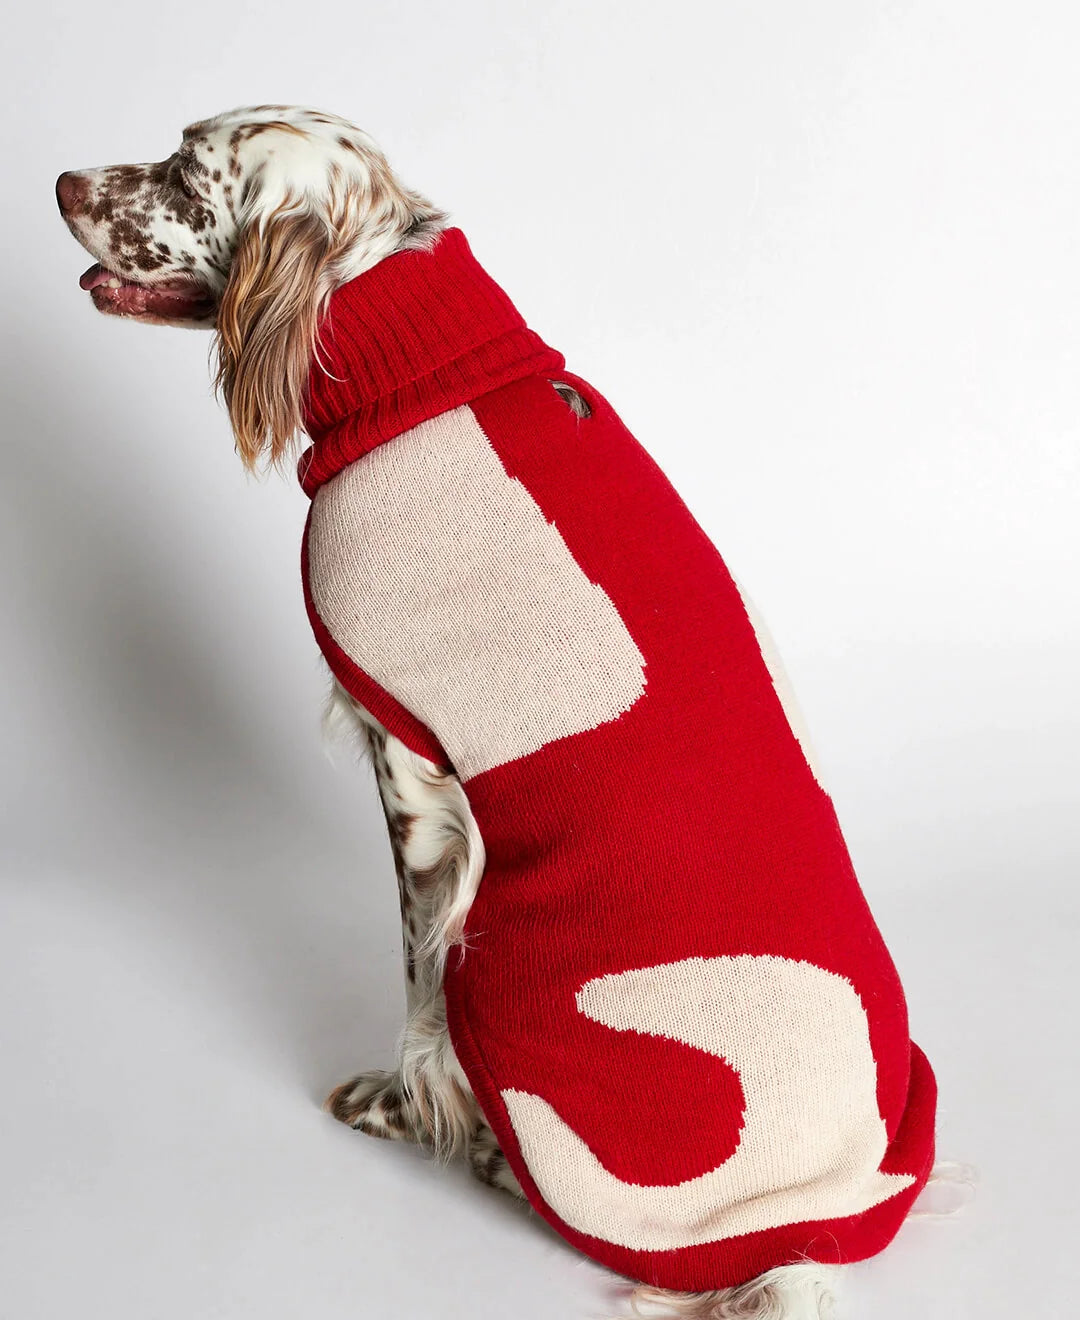 René Red Merino Wool Dog Sweater